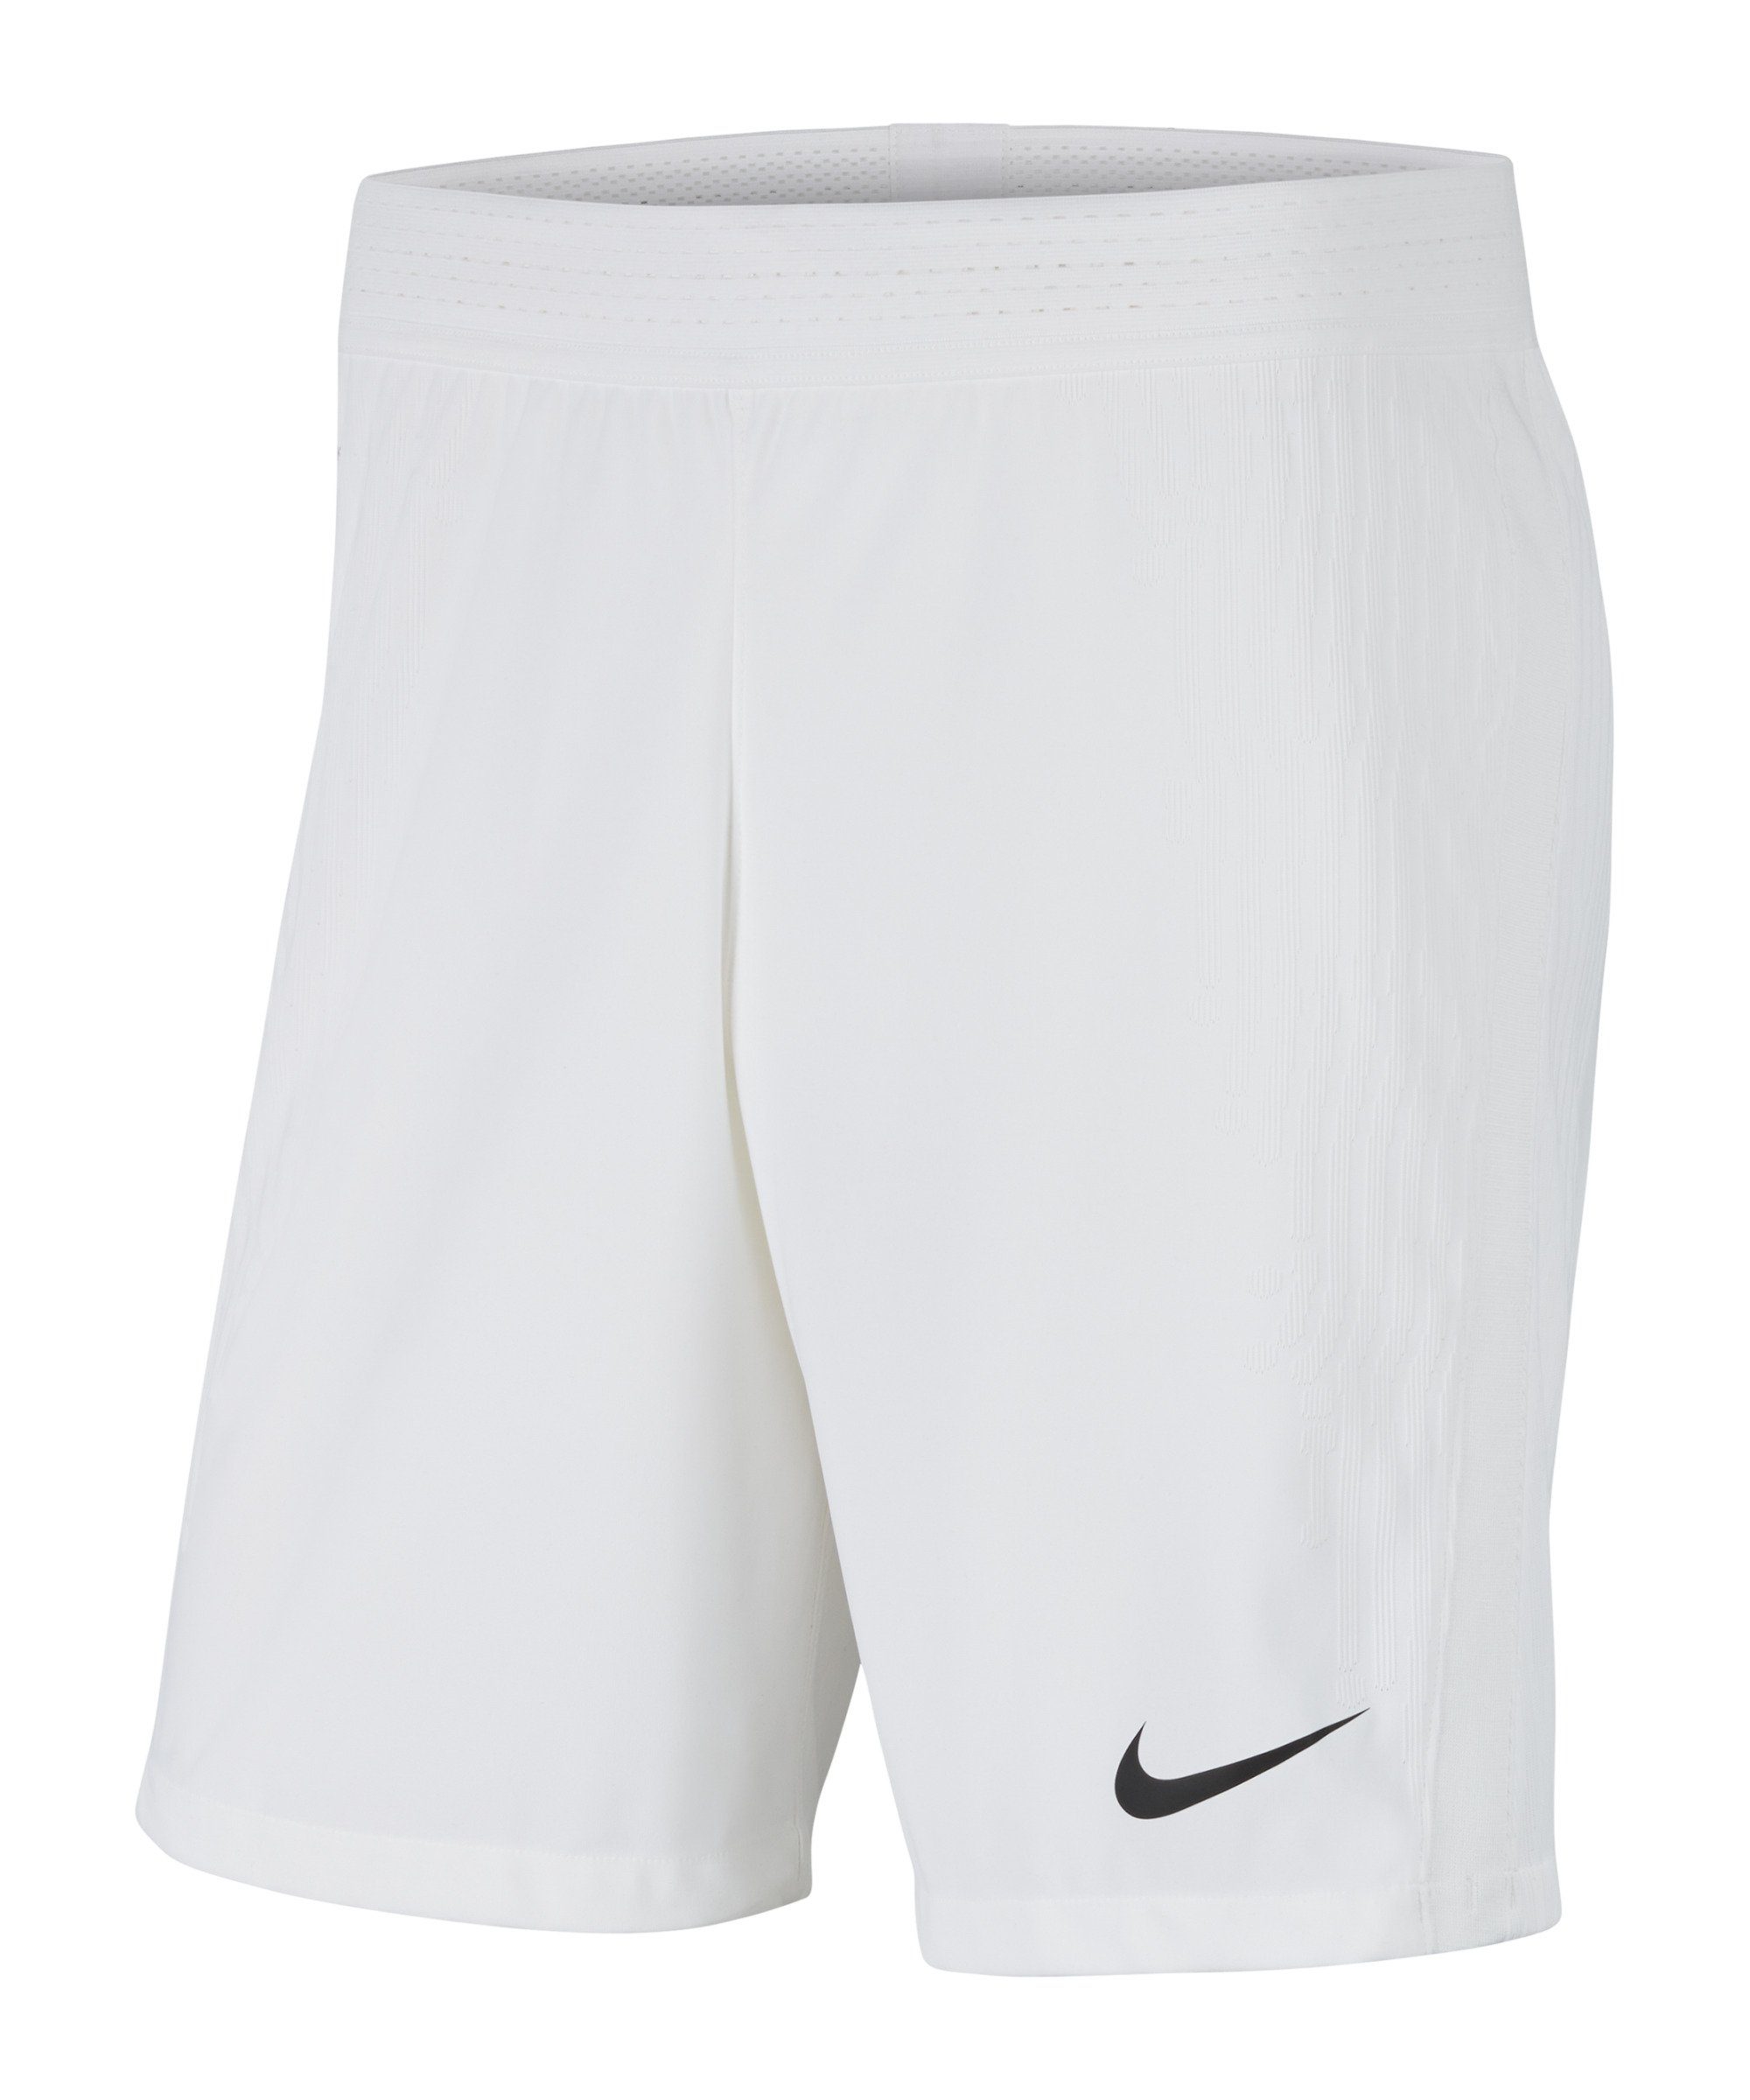 Nike Sporthose Vapor Short weissschwarz III Knit